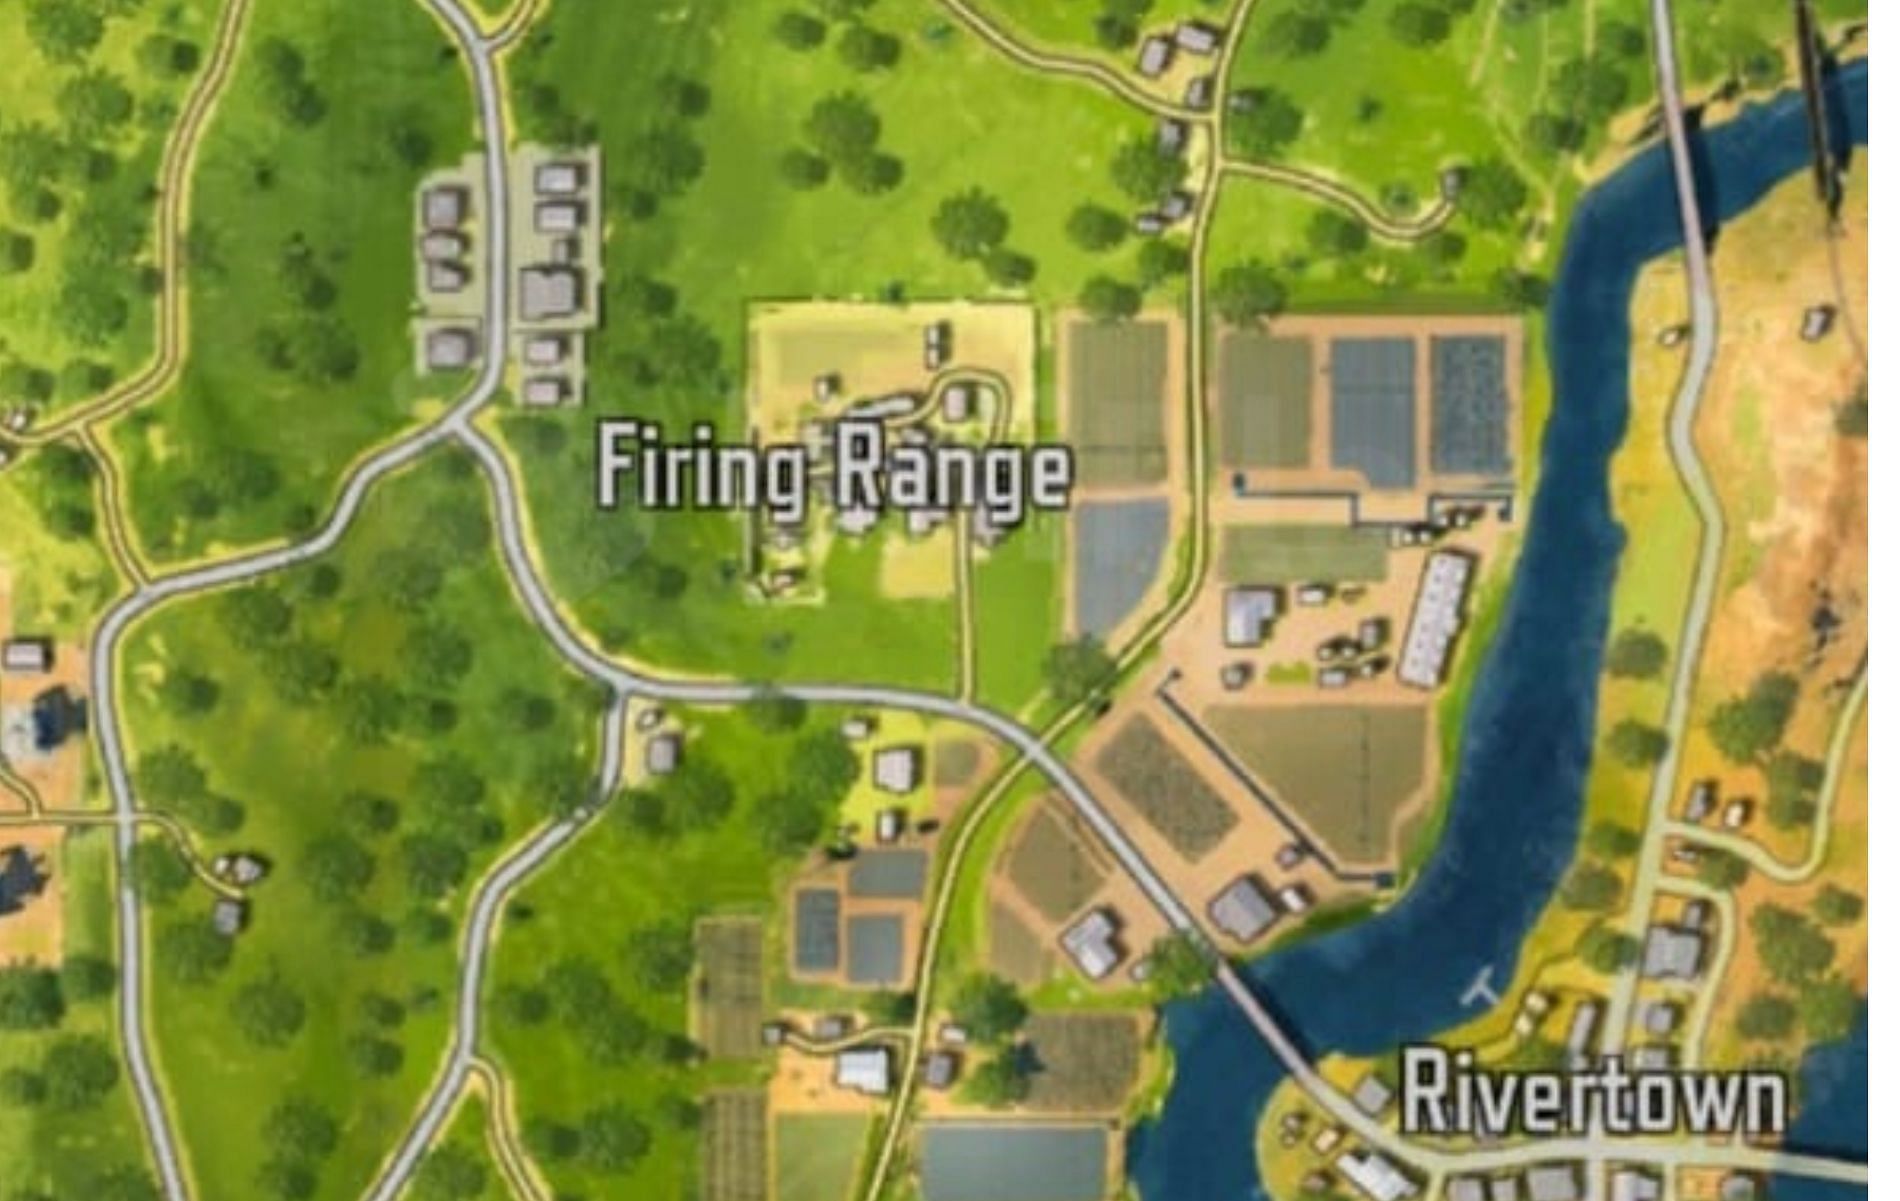 Drop at Firing range if you are comfortable at close range combat (Image via Activision)